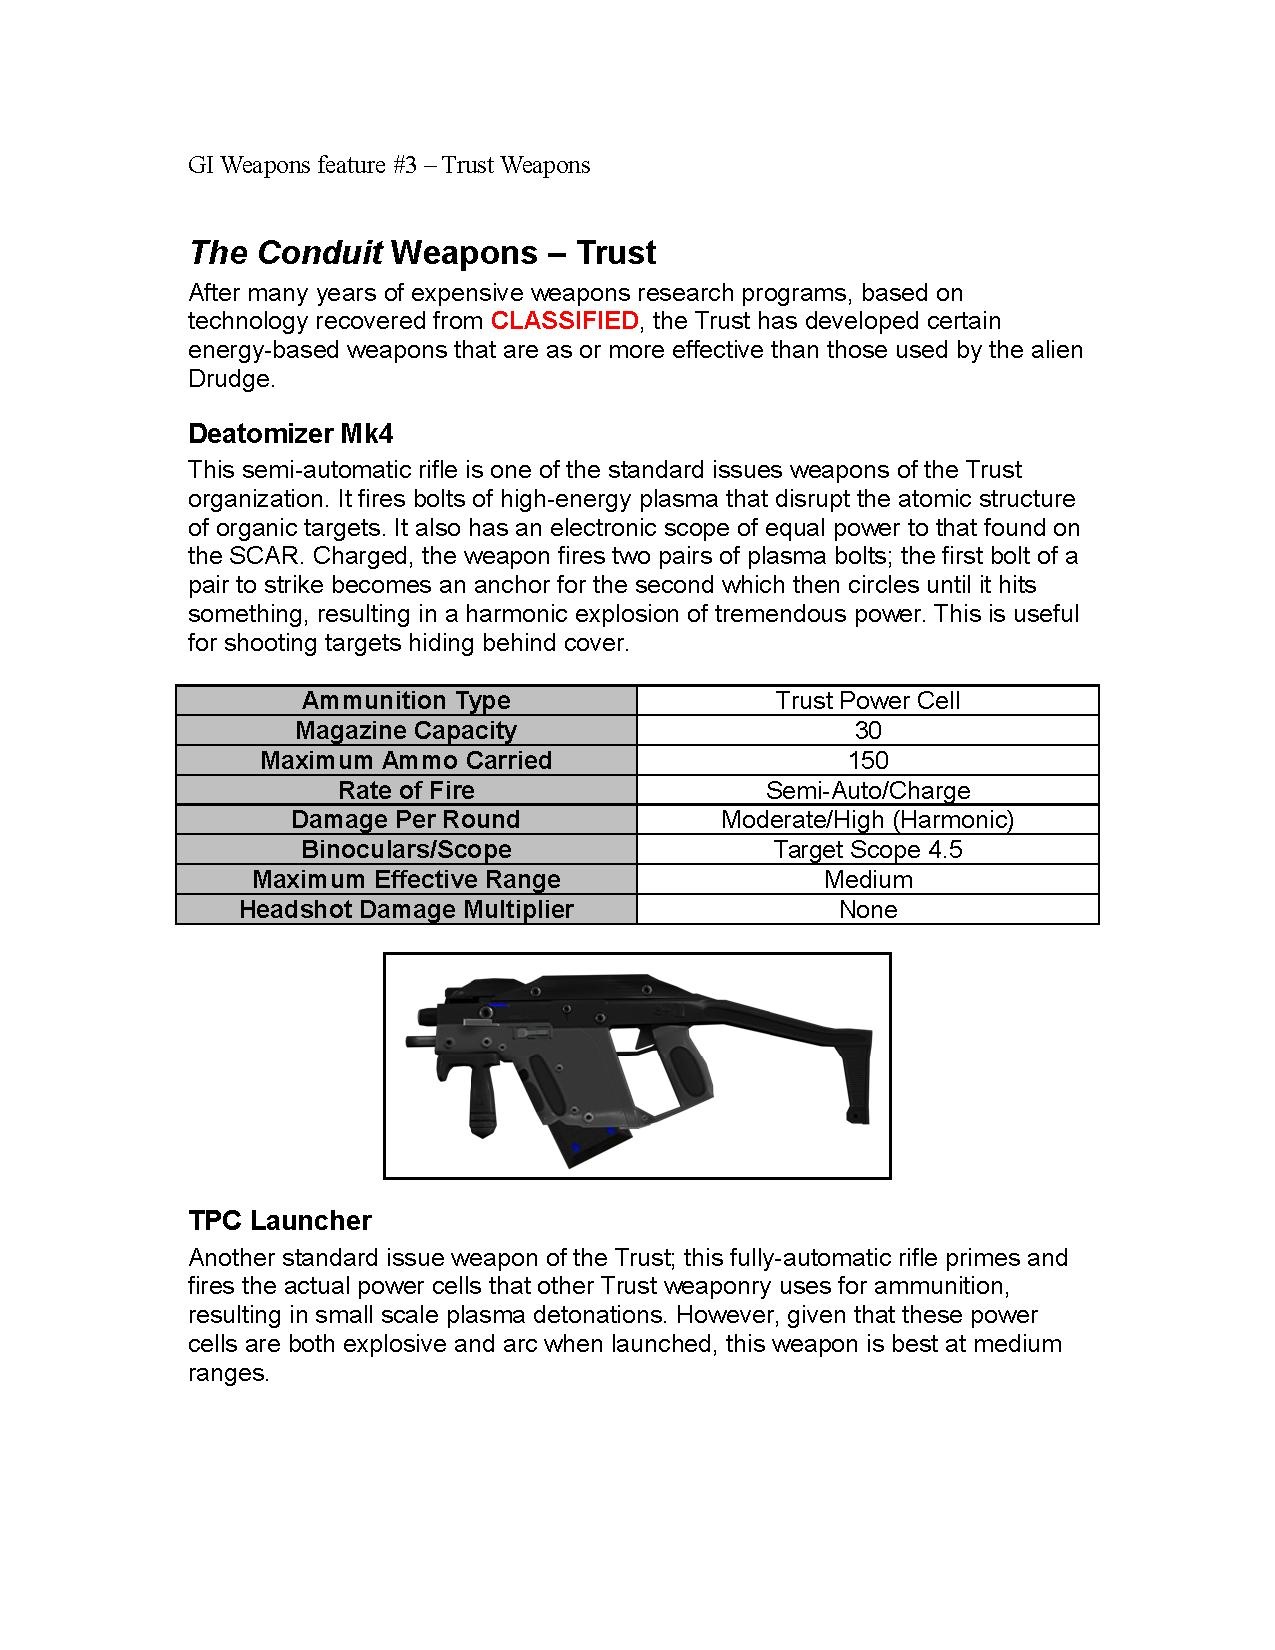 Conduit GI Weapons feature 3 trust.pdf